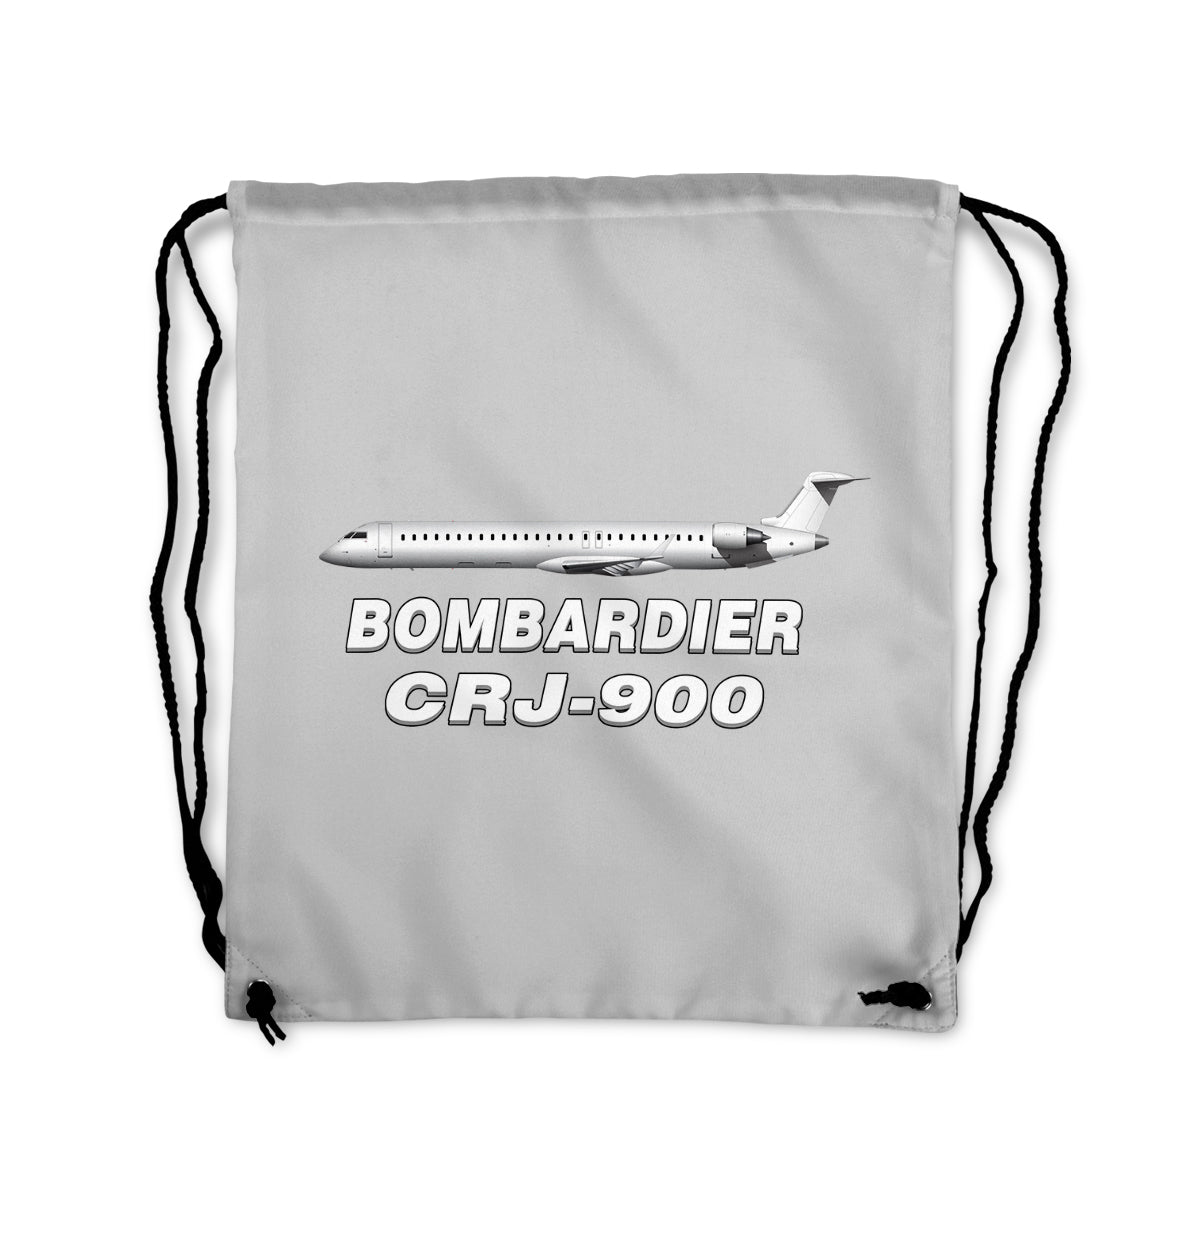 Bombardier CRJ-900 Designed Drawstring Bags